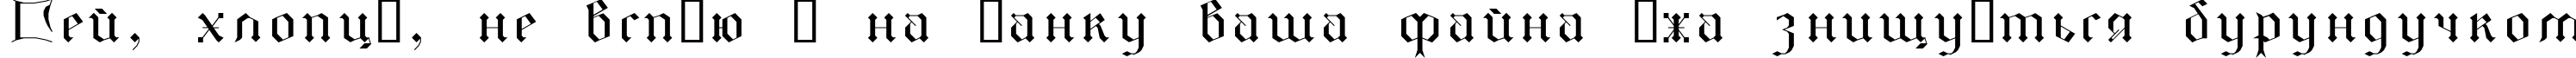 Пример написания шрифтом GothicI текста на украинском